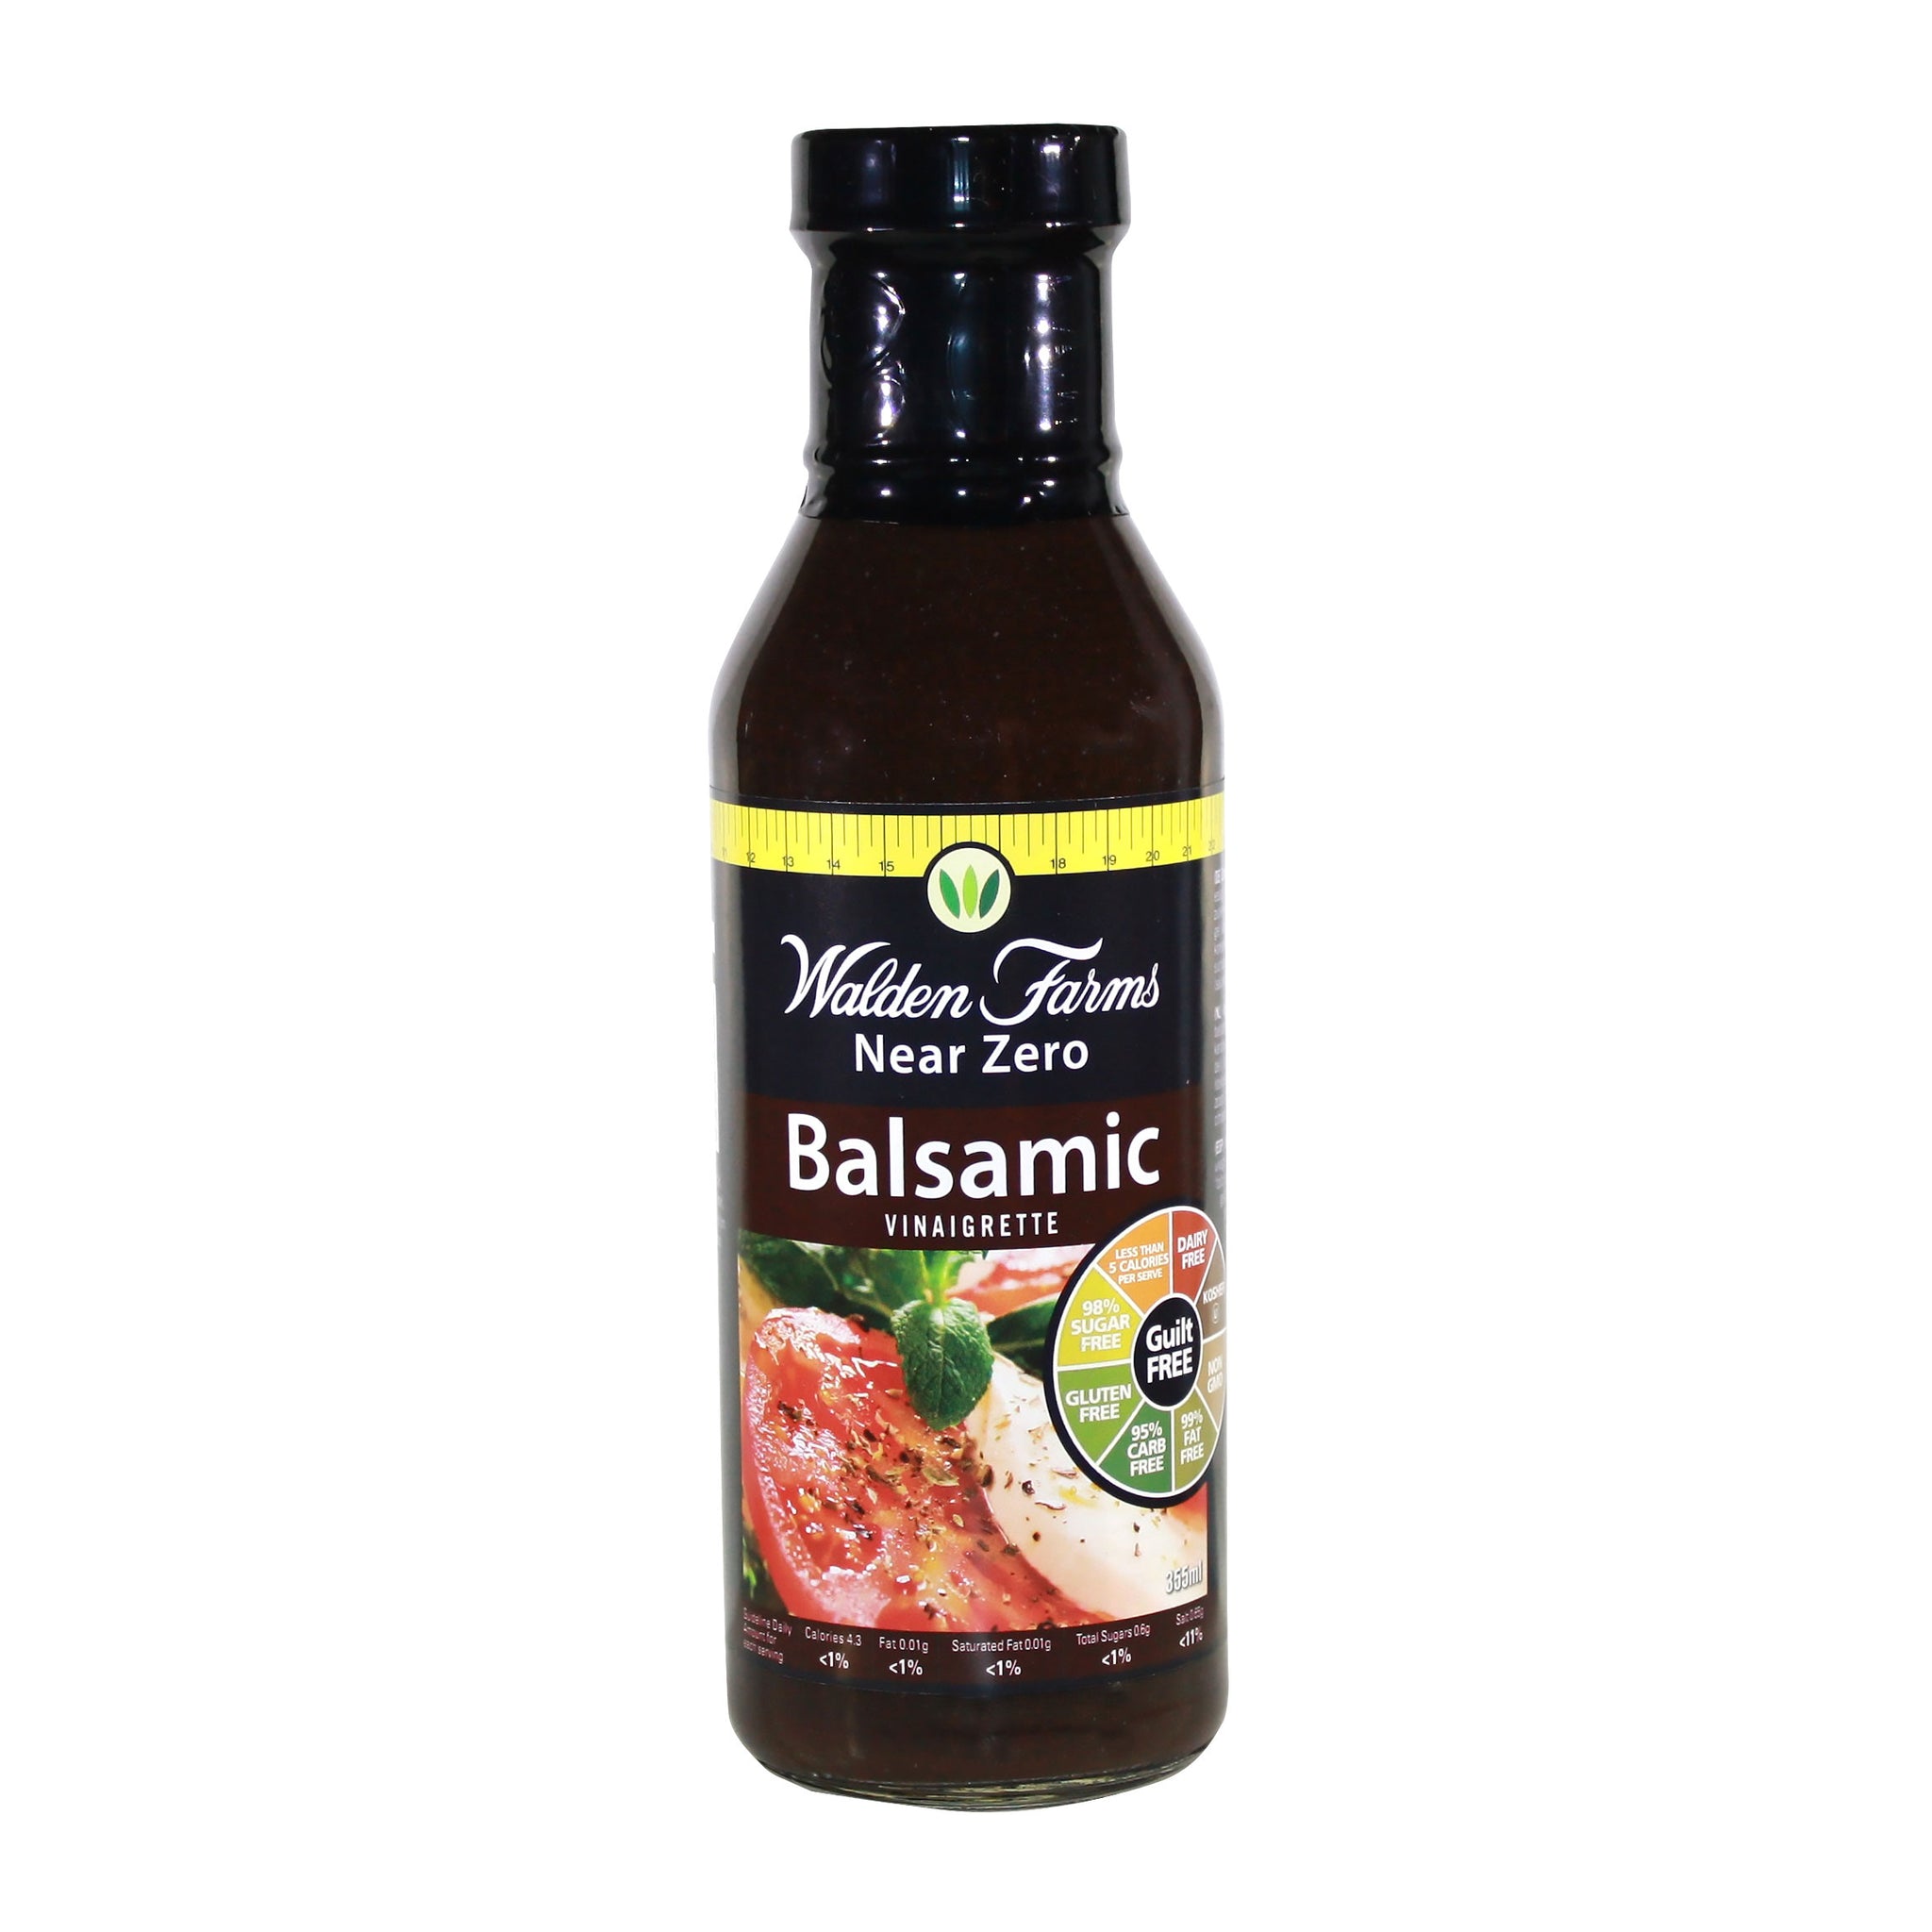 Kosher & Gluten Free Balsamic Vinaigrette with Near Zero Calorie & Fat